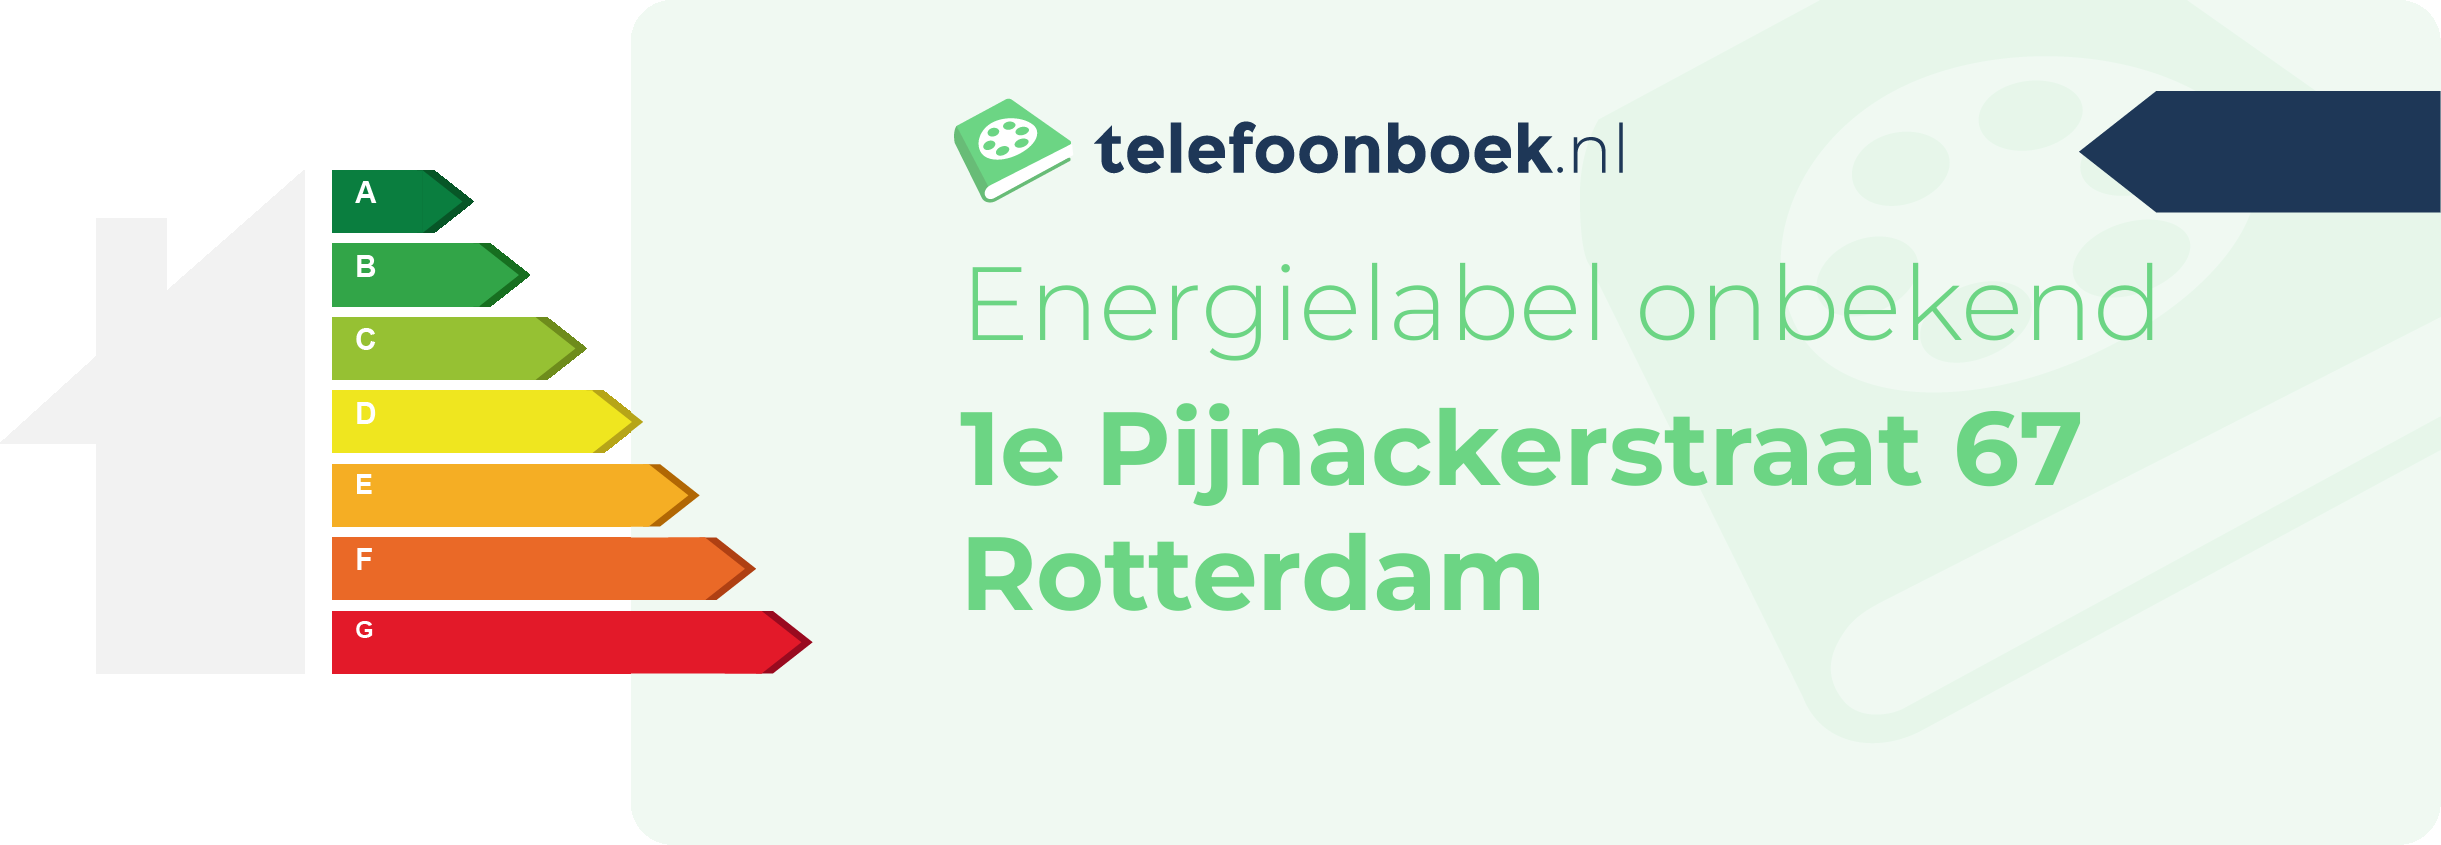 Energielabel 1e Pijnackerstraat 67 Rotterdam